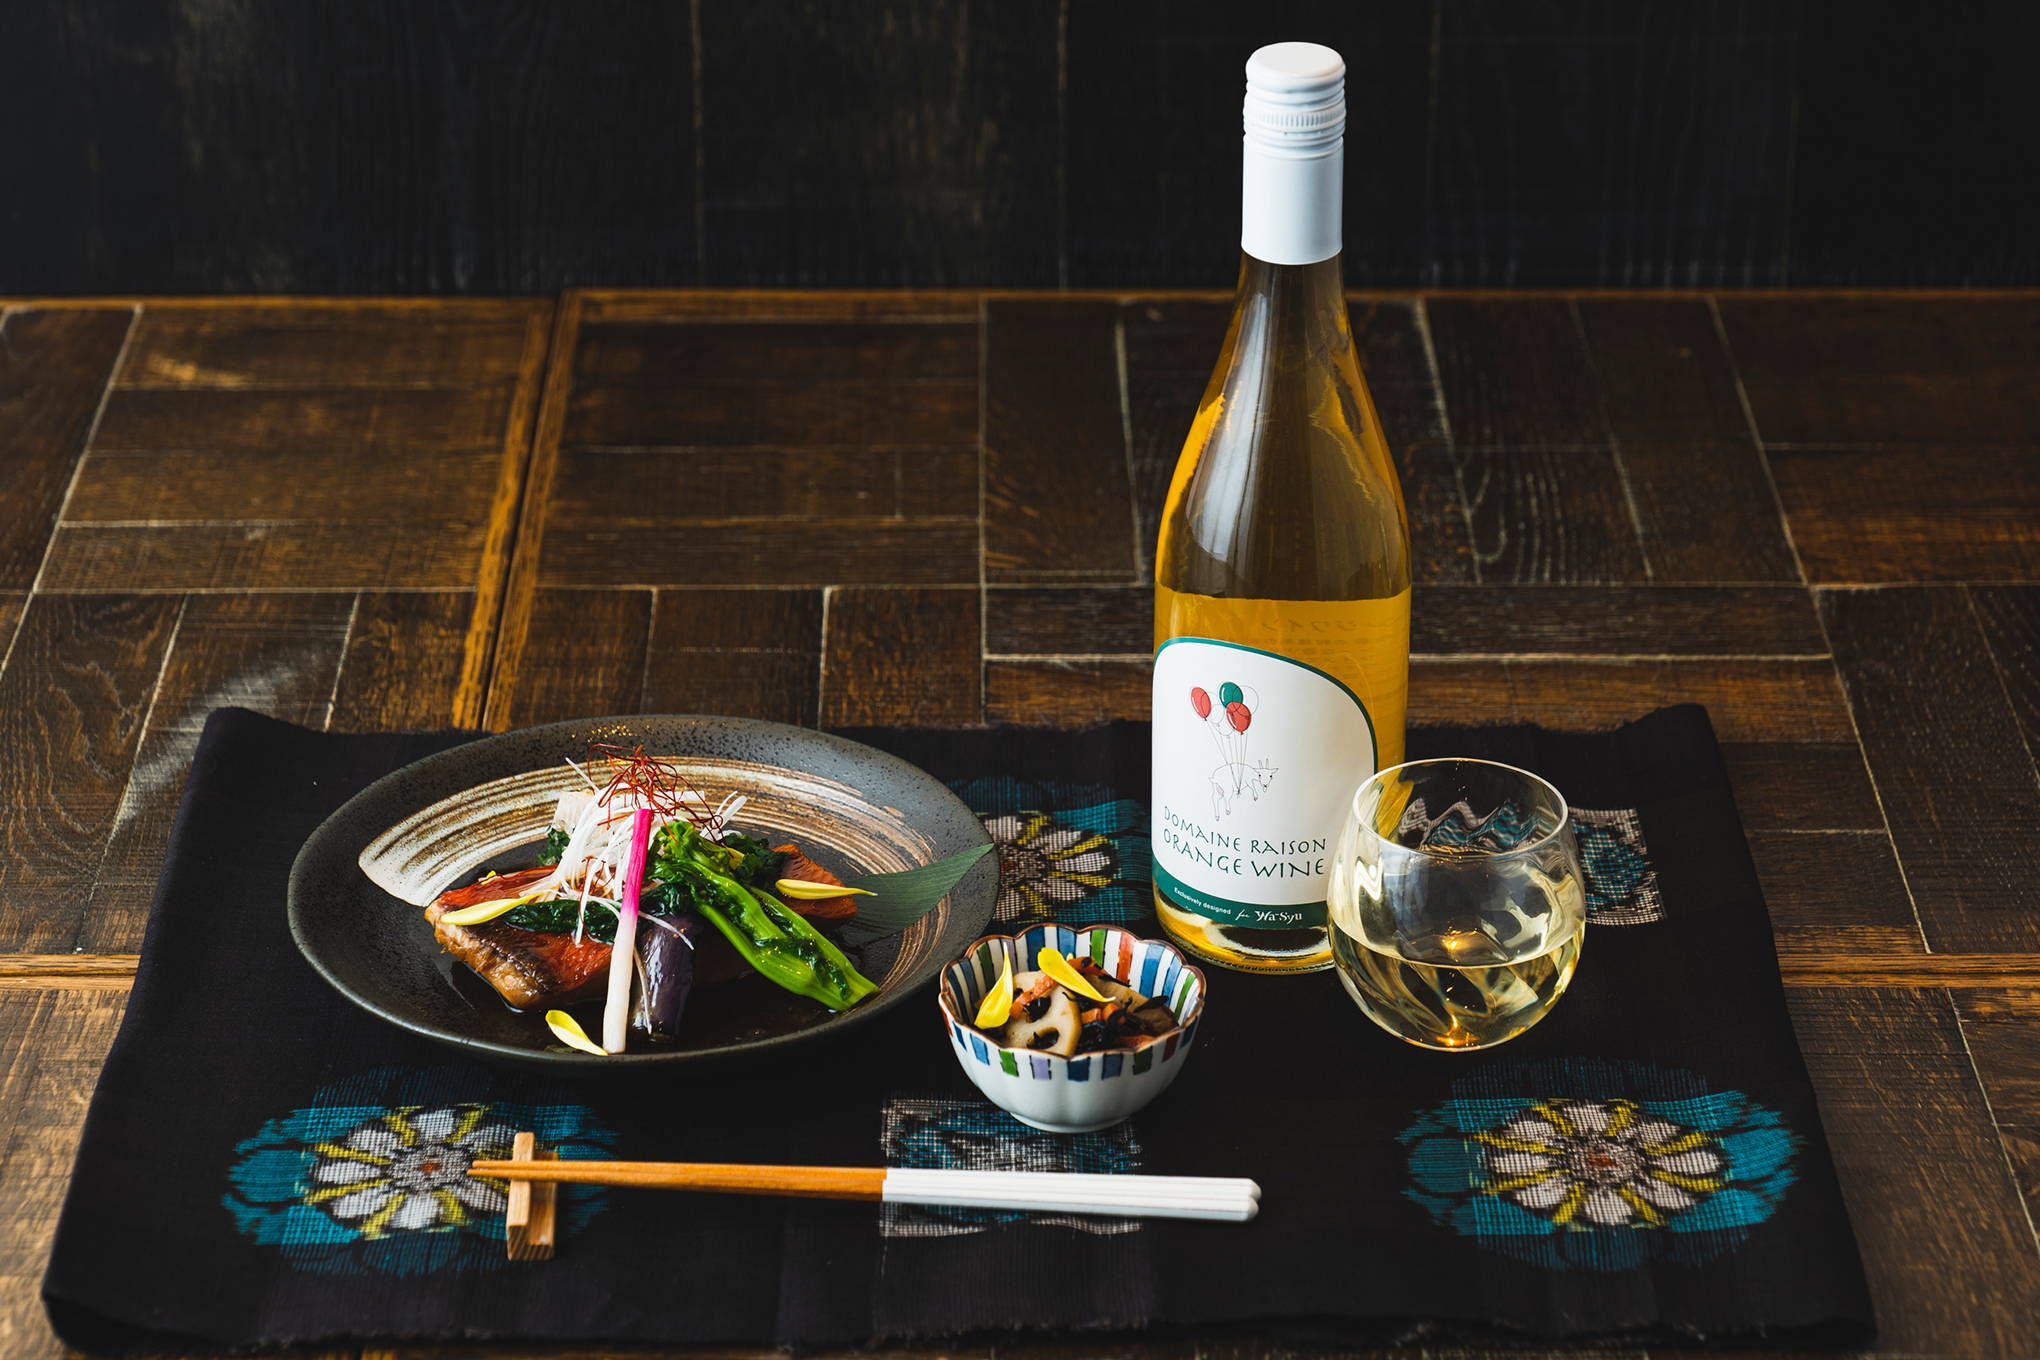 wa-syuバイヤーは、和食×オレンジワインを提案！おすすめは金目鯛の煮付けとのマリアージュ。